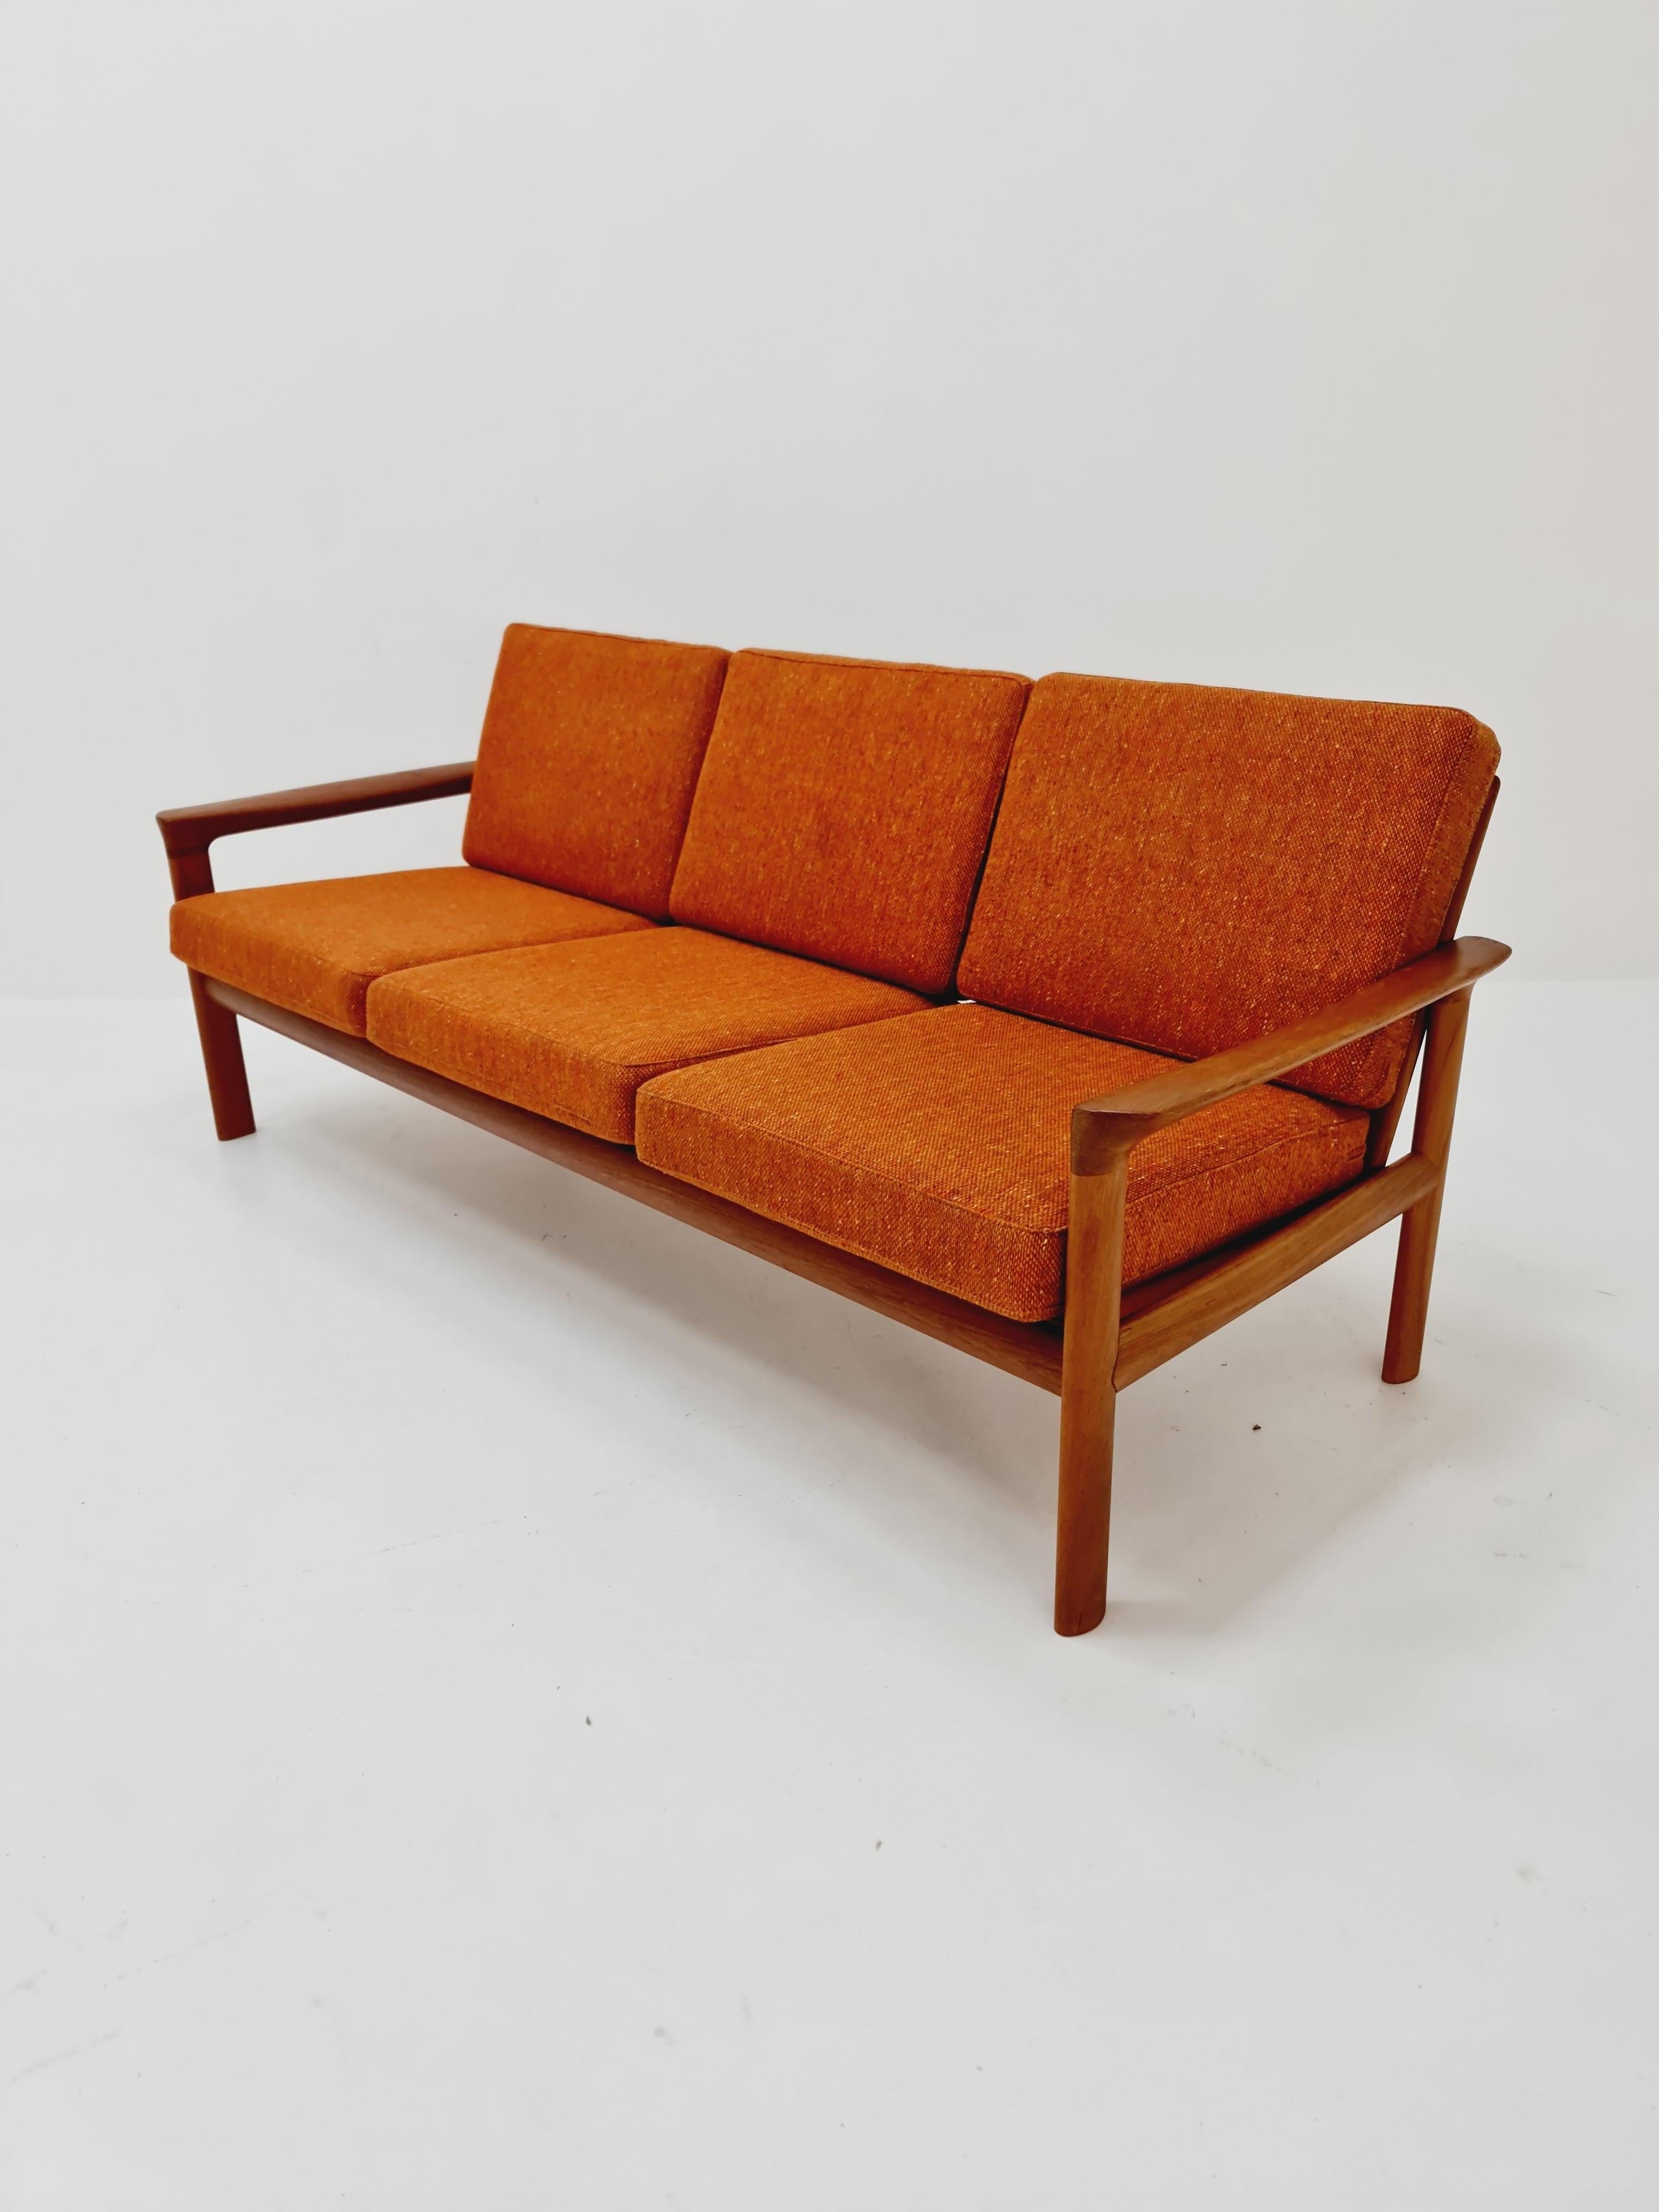 Mid century easy lounge couch by Sven ellekaer for komfort teak  10